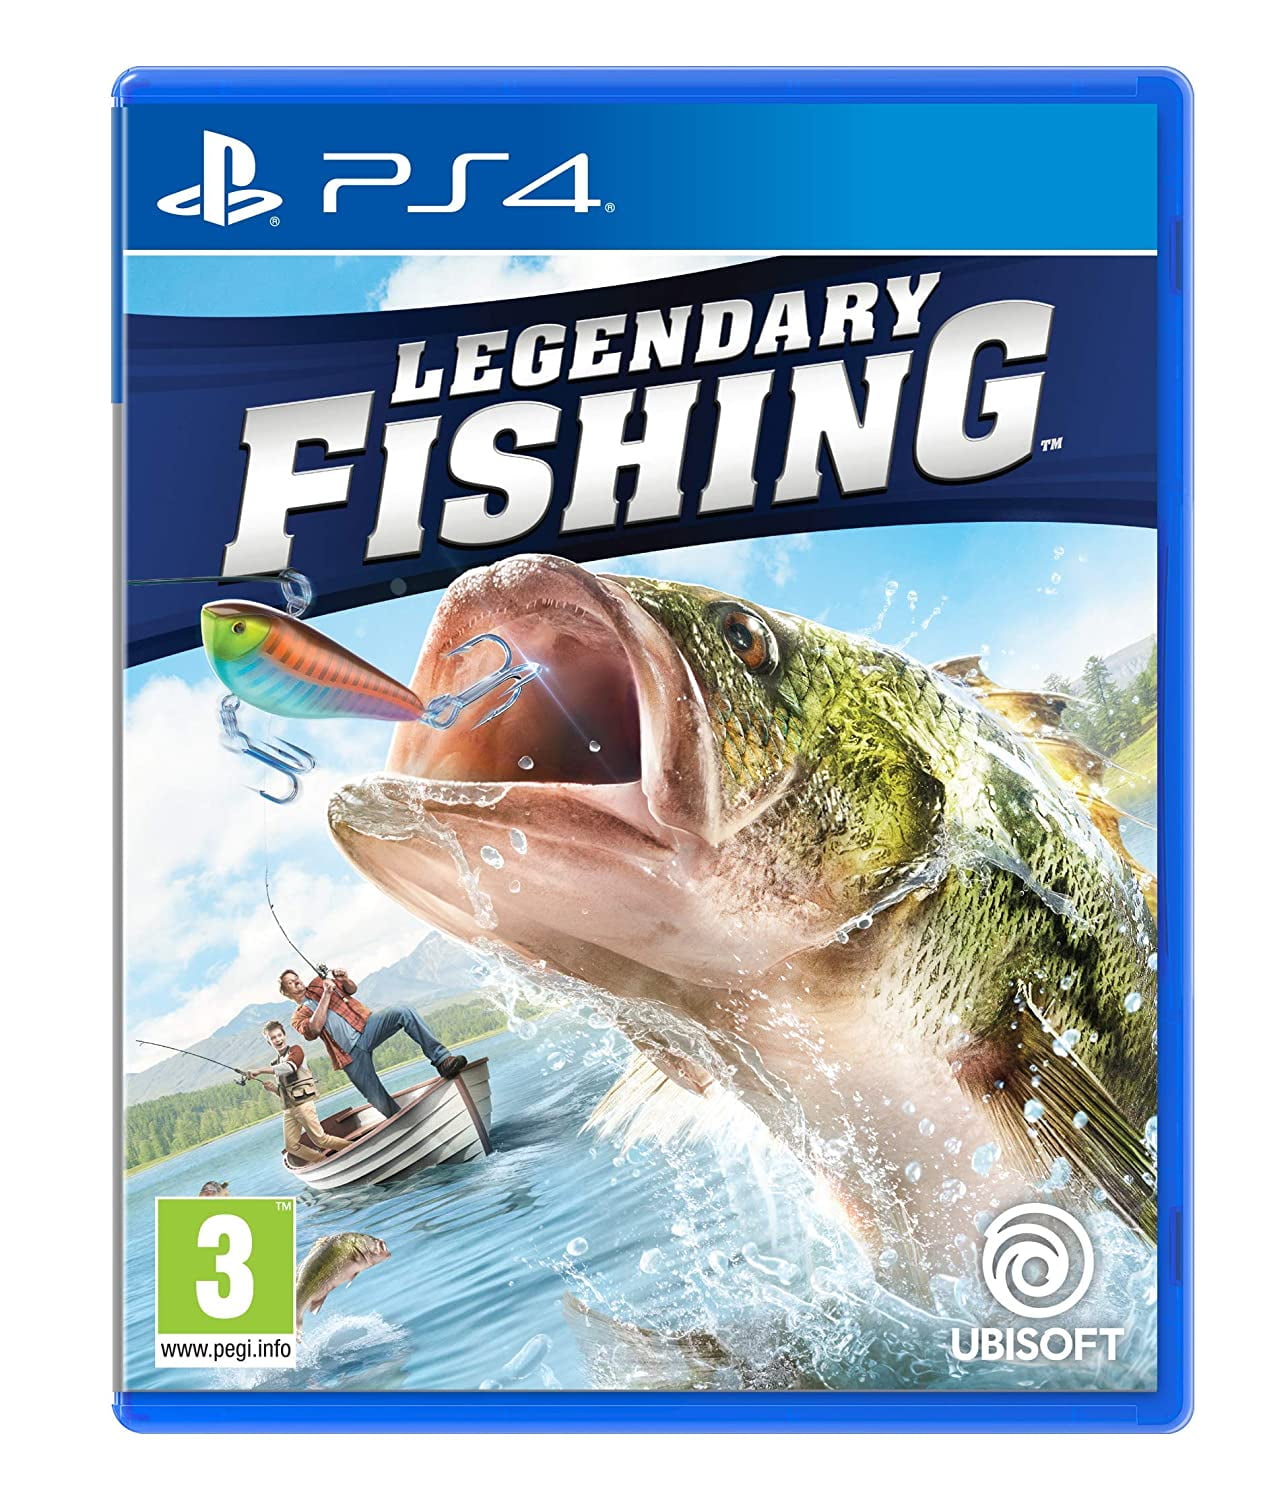 Fishing Sim World PS4: PlayStation 4: Video Games 